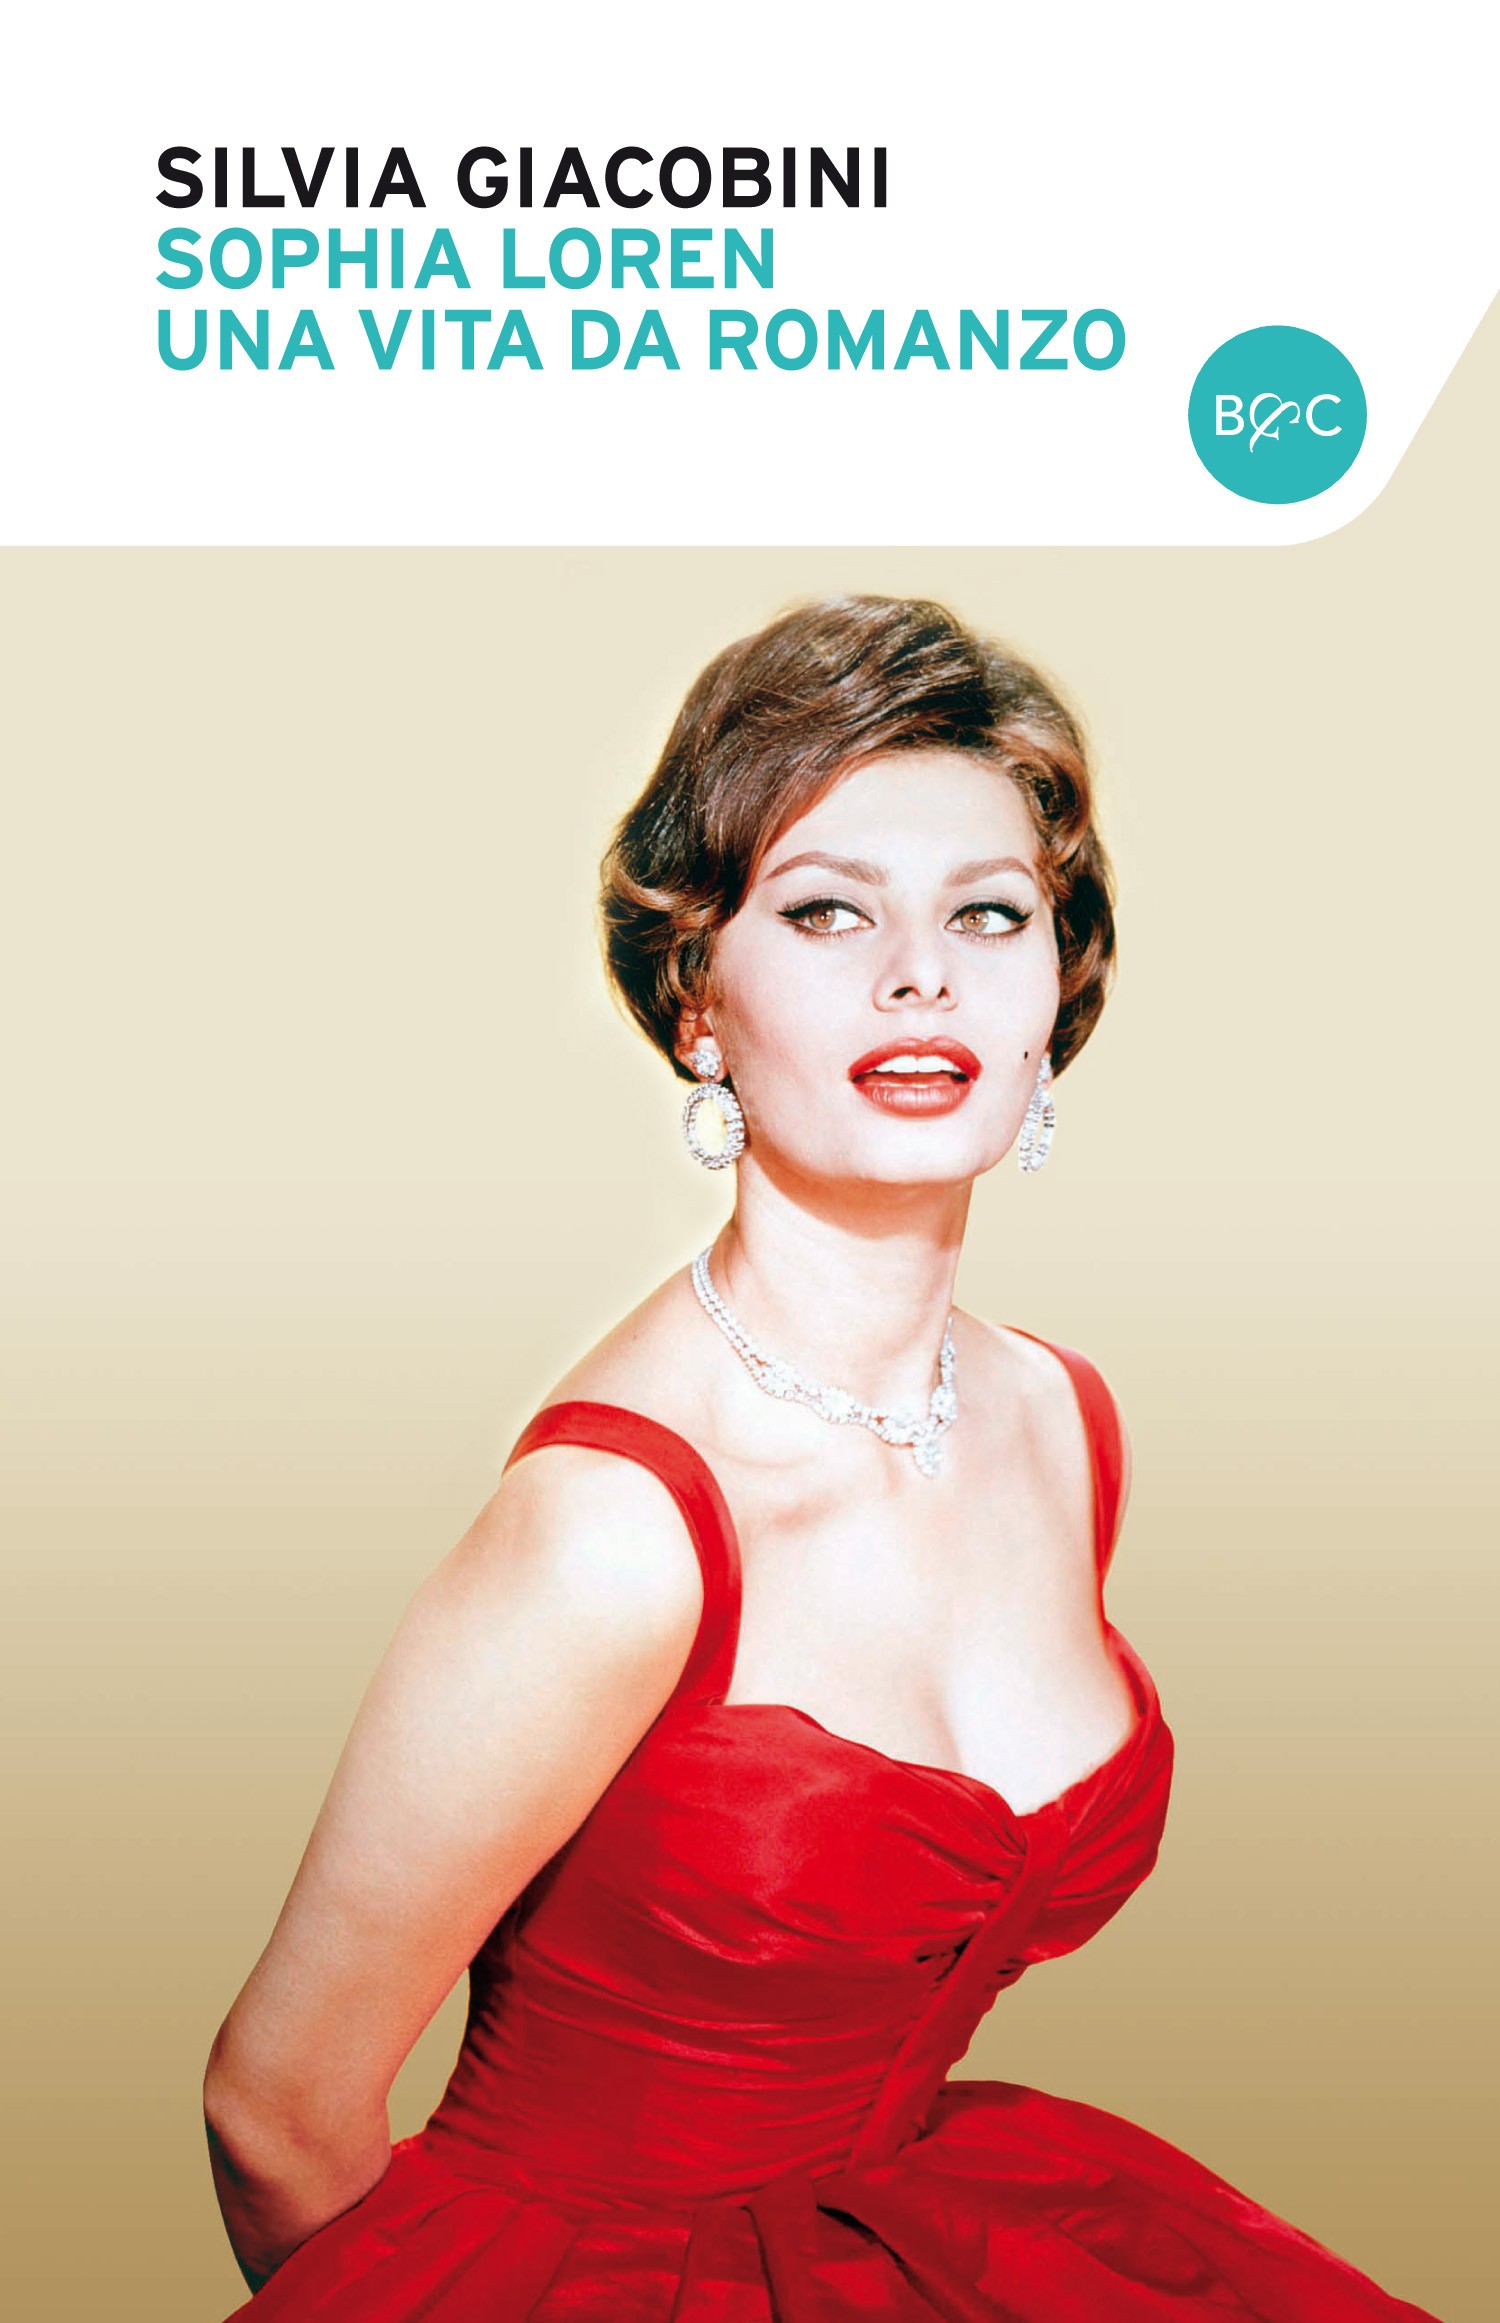 Sophia Loren - Librerie.coop